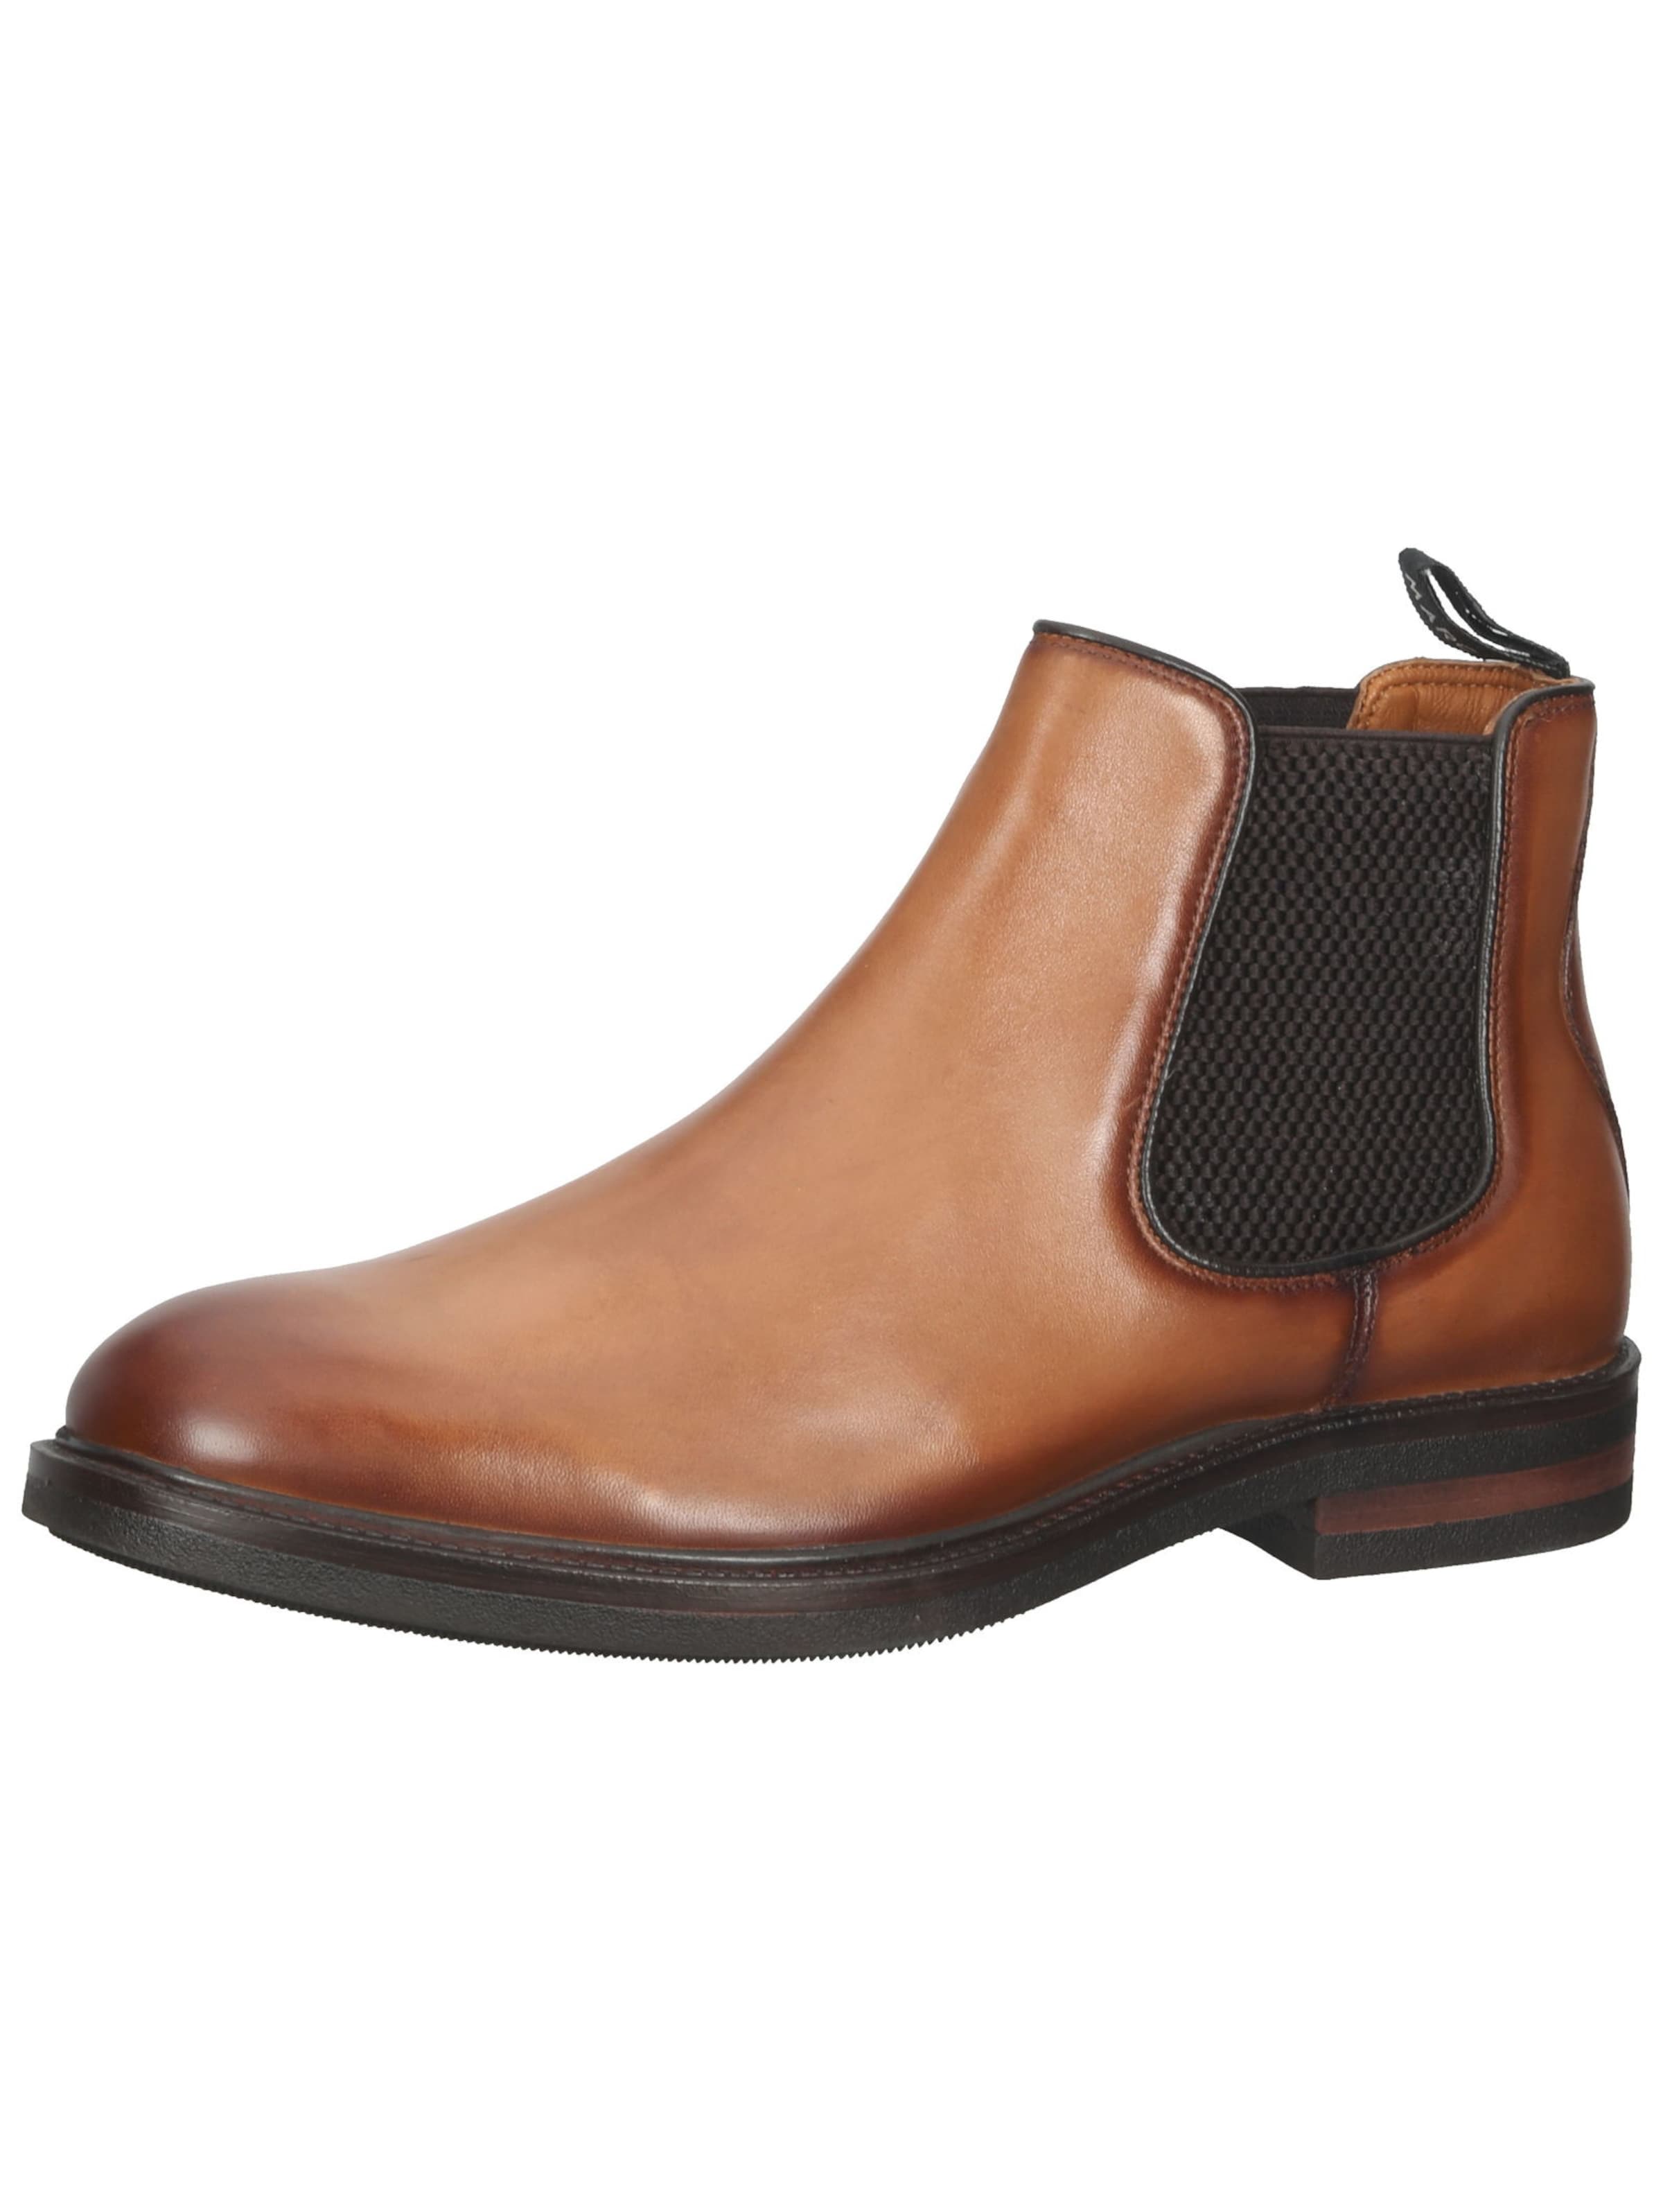 Männer Boots & Stiefel Marc Shoes Chelsea Boots in Cognac, Dunkelbraun - YT02648